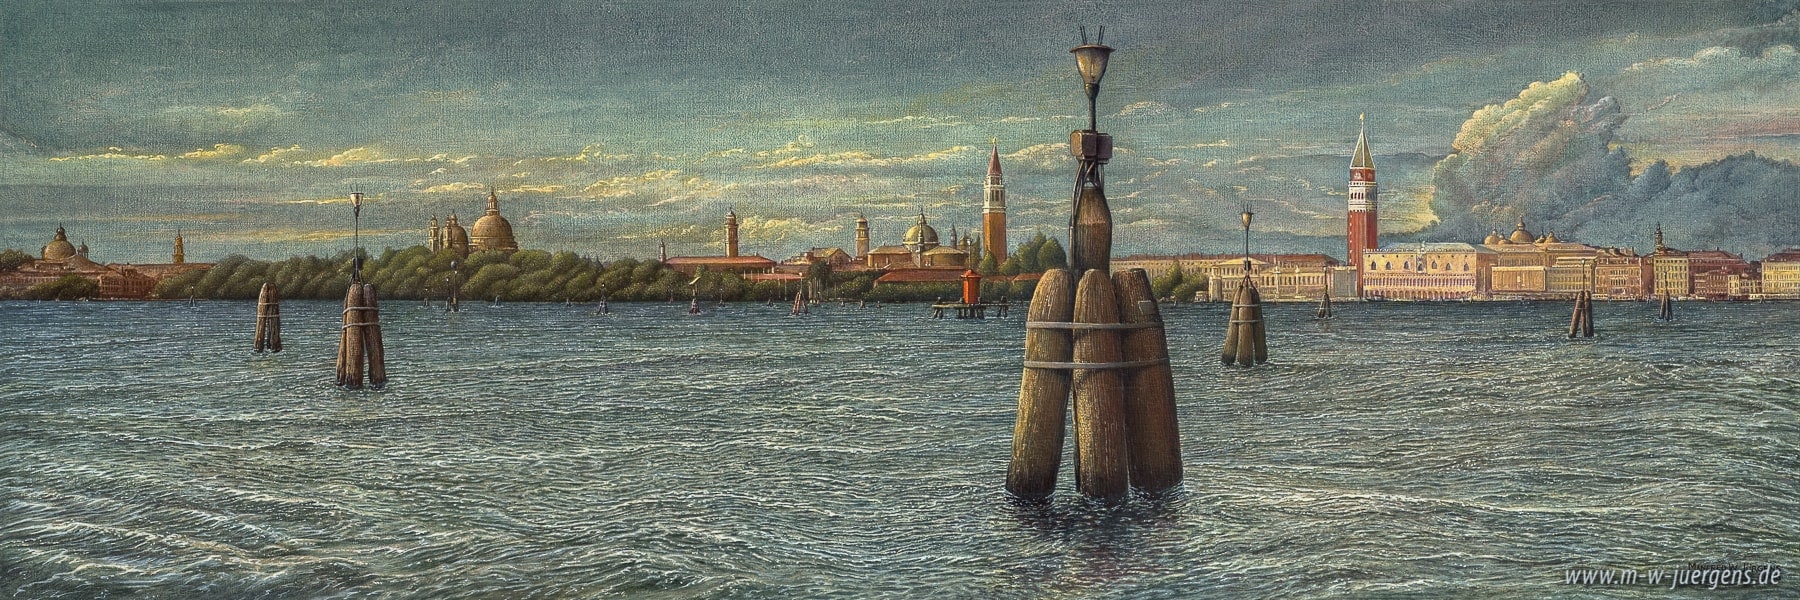 Venice Painting, Manfred W. Jürgens